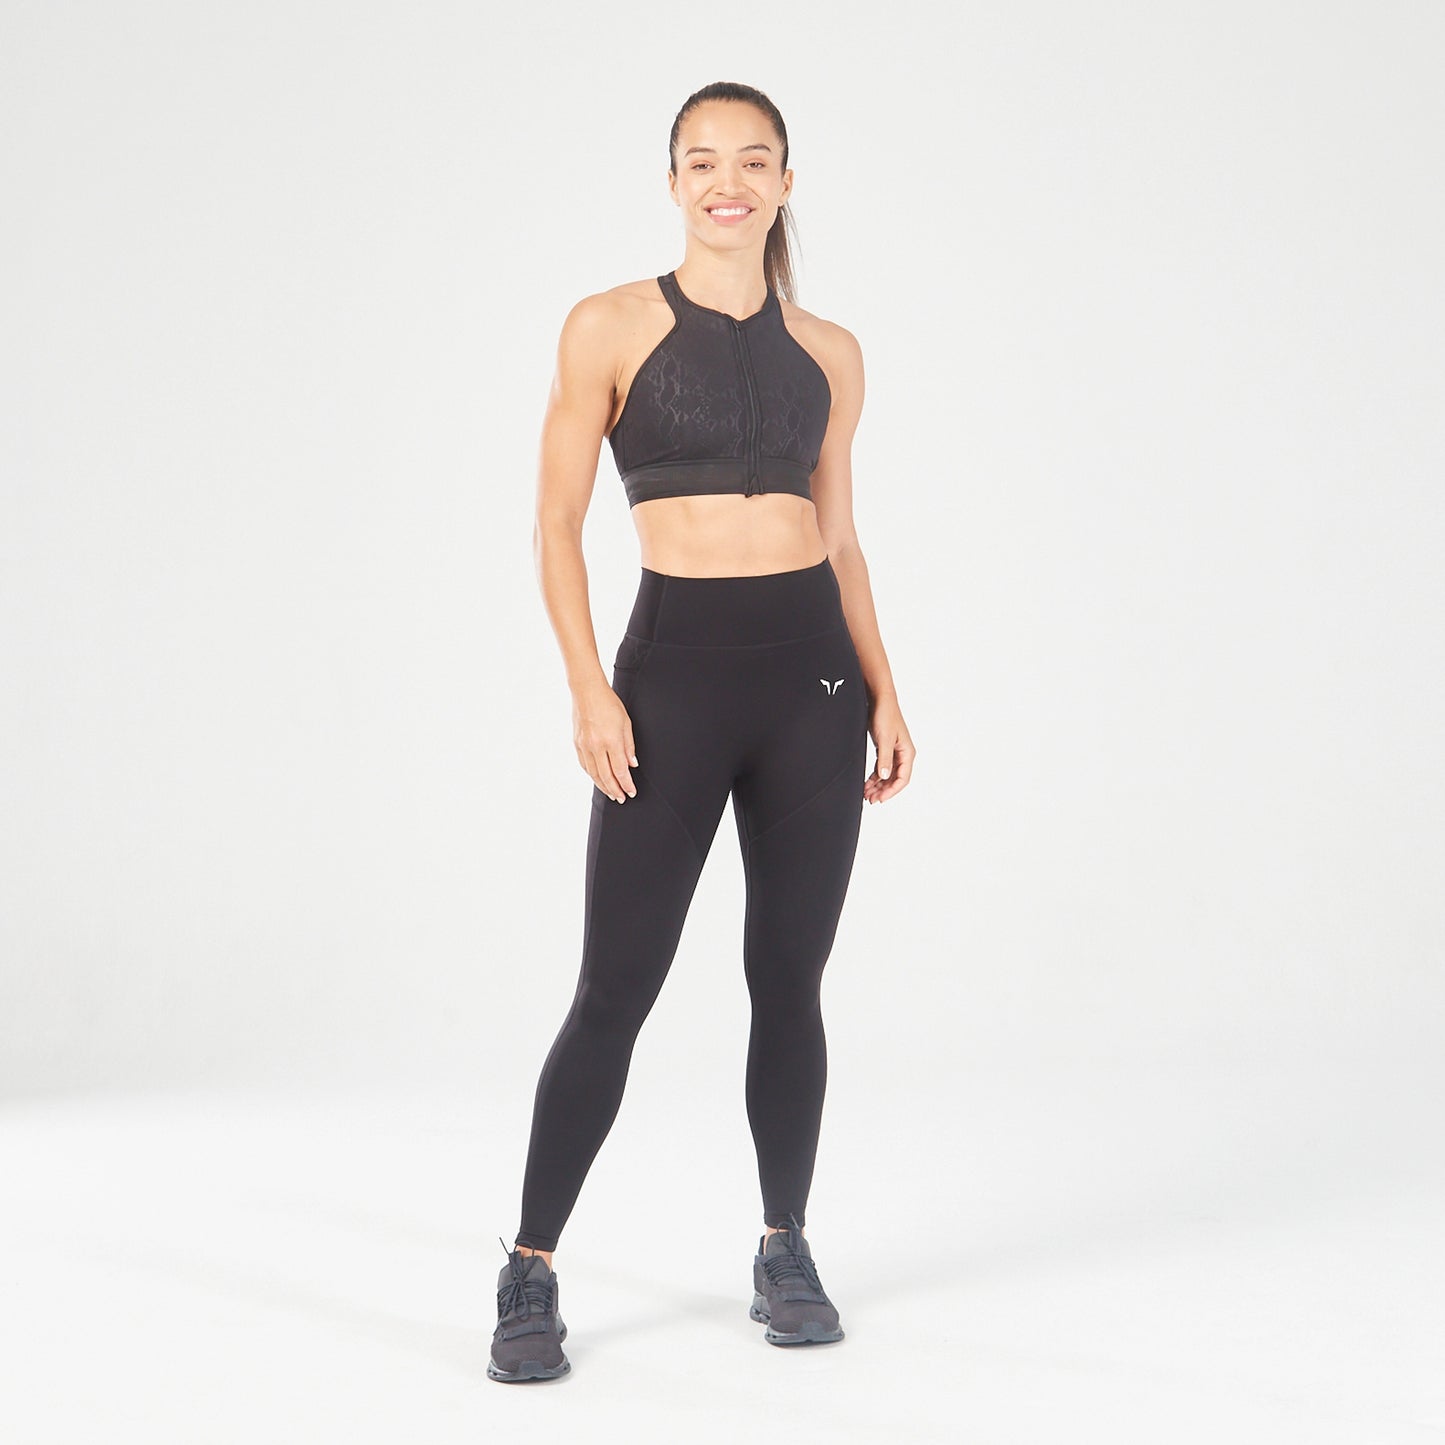 squatwolf-workout-clothes-core-panel-leggings-black-gym-leggings-for-women